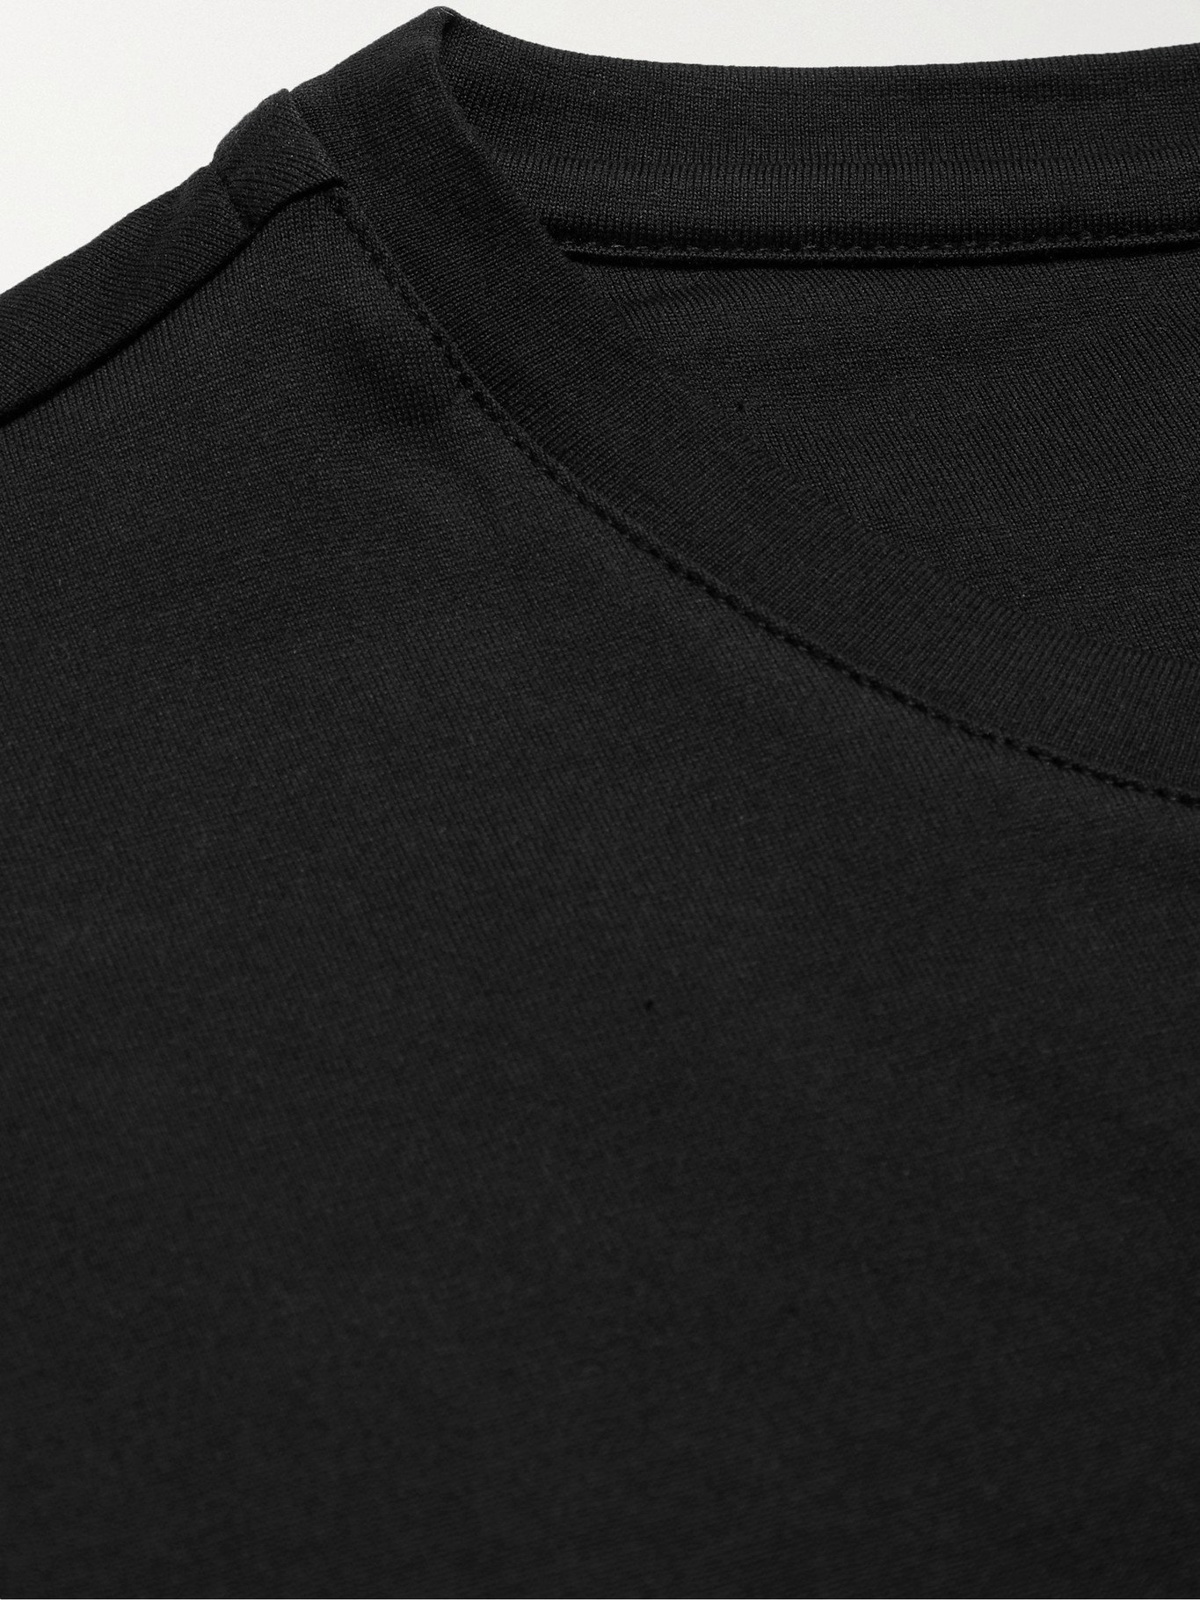 Fendi Embroidered Eyes Motif T-shirt - Black